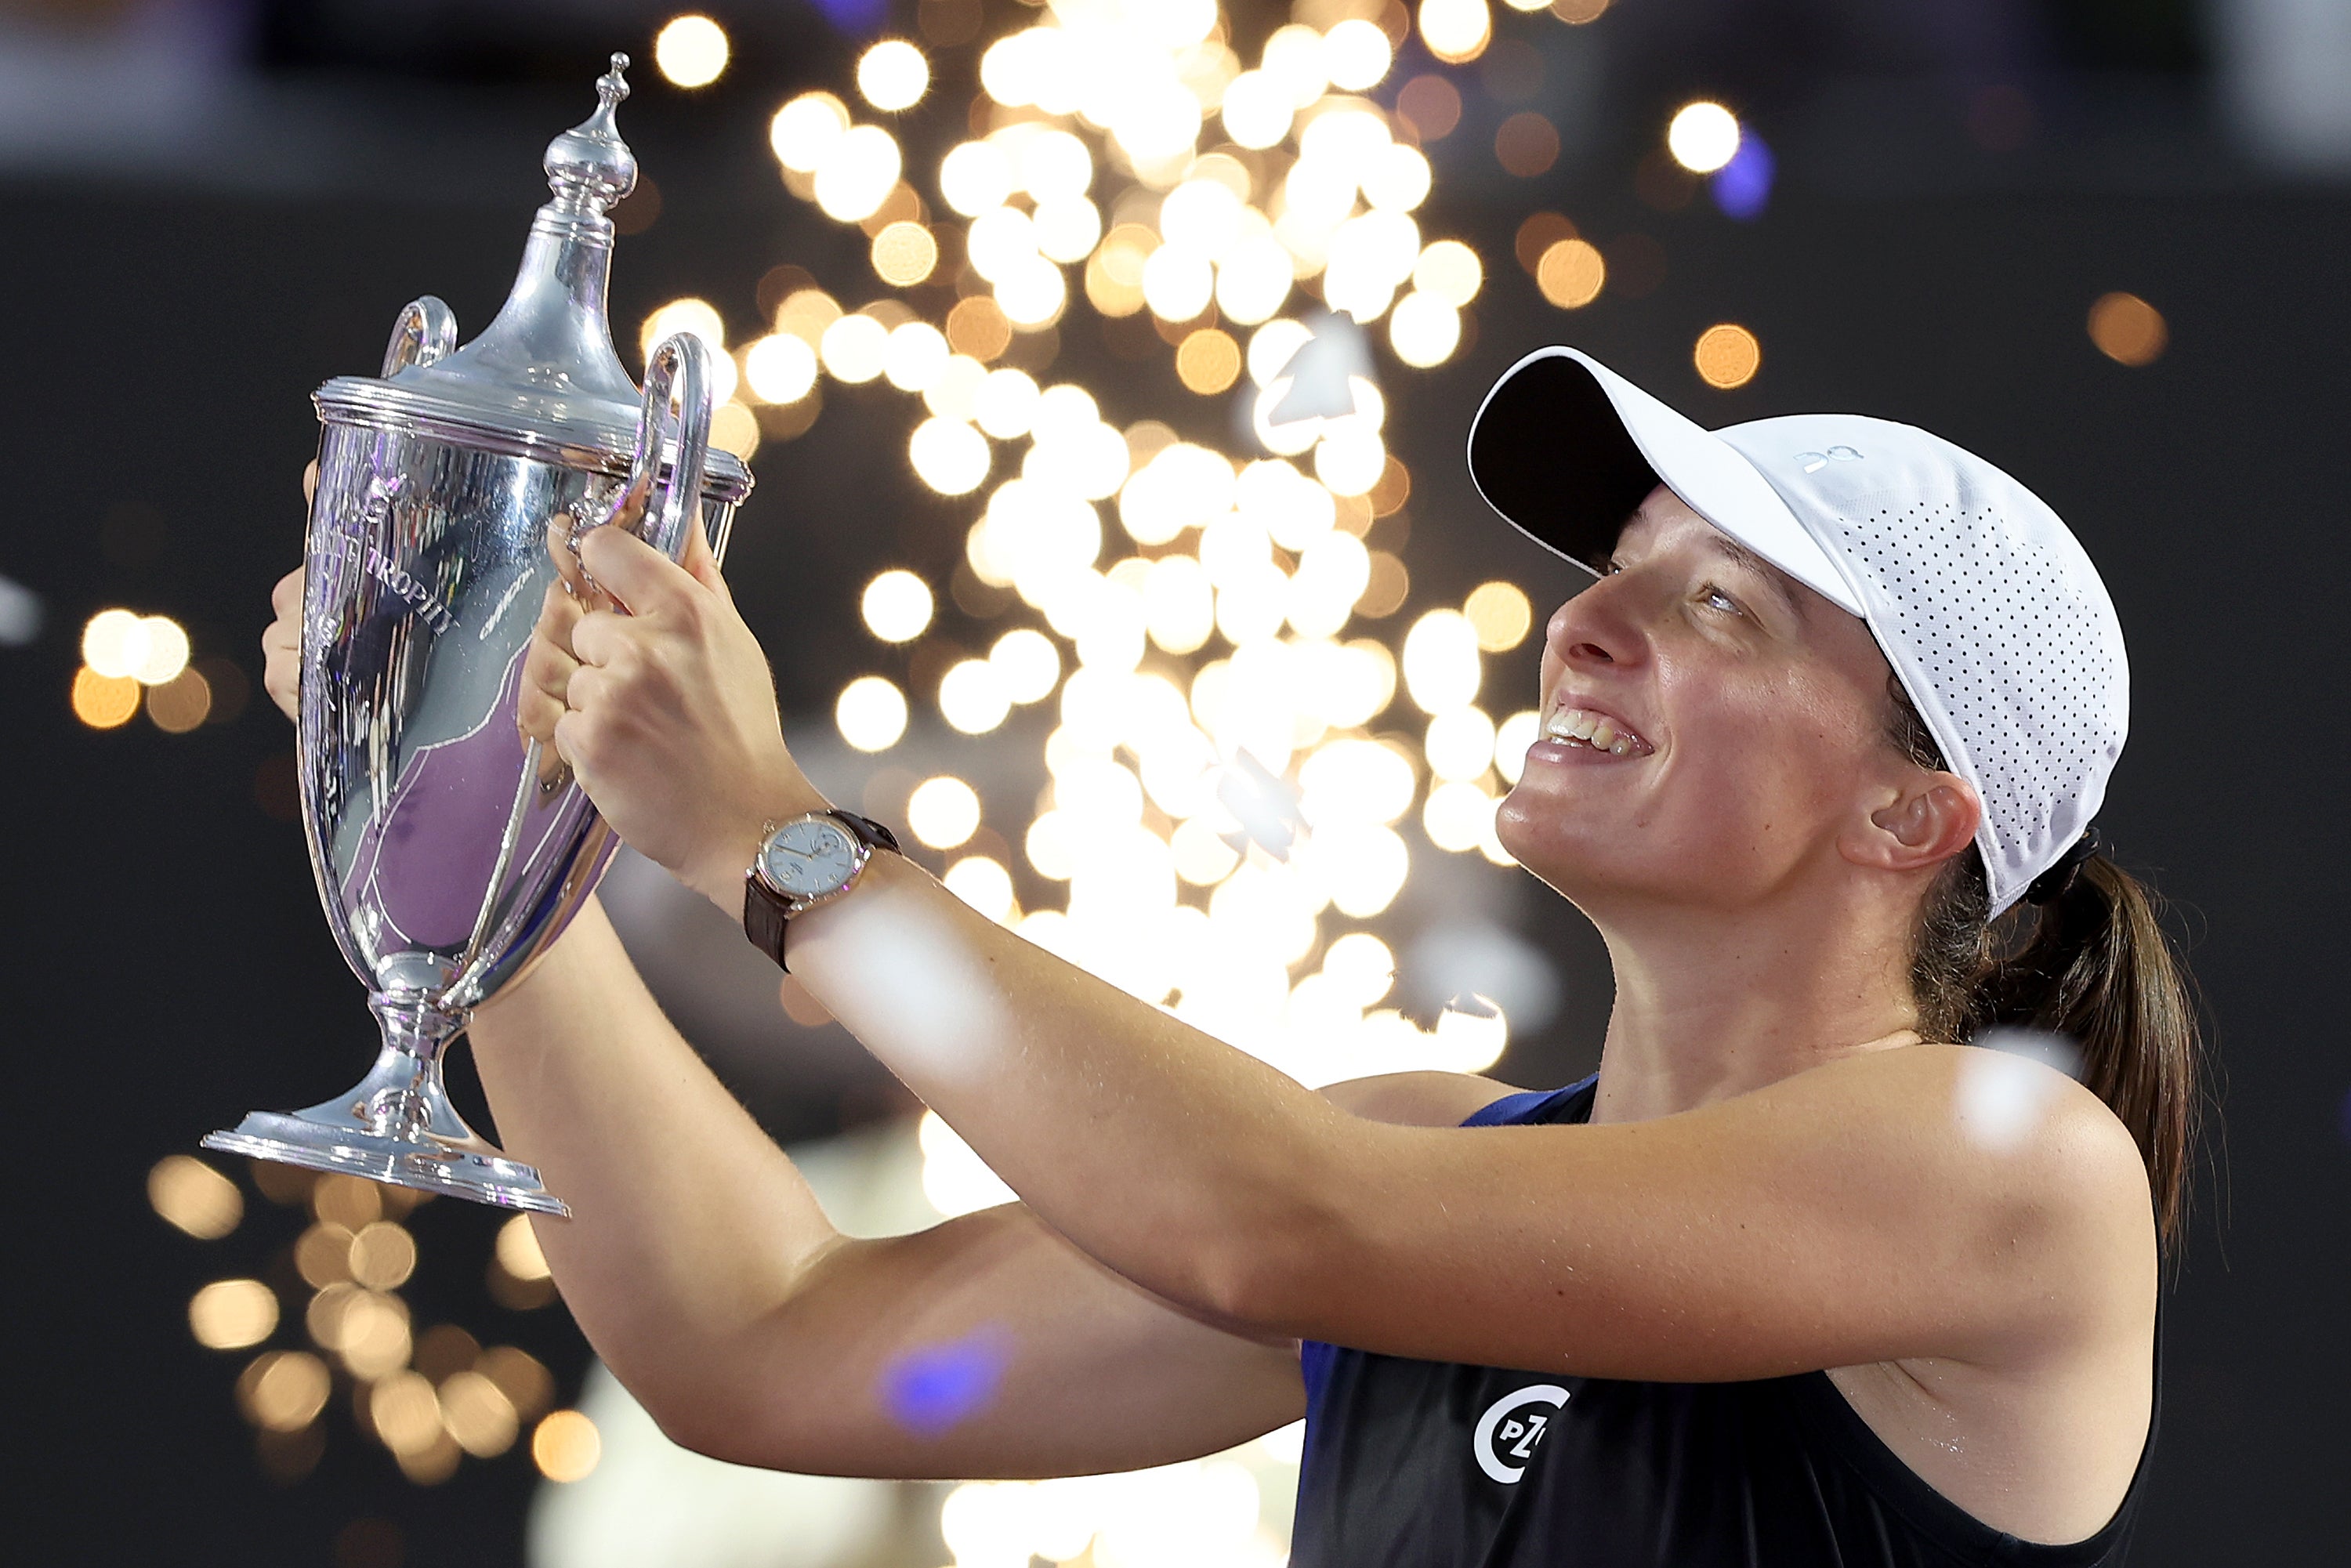 Iga Swiatek, the World No 1, won the WTA Finals last season